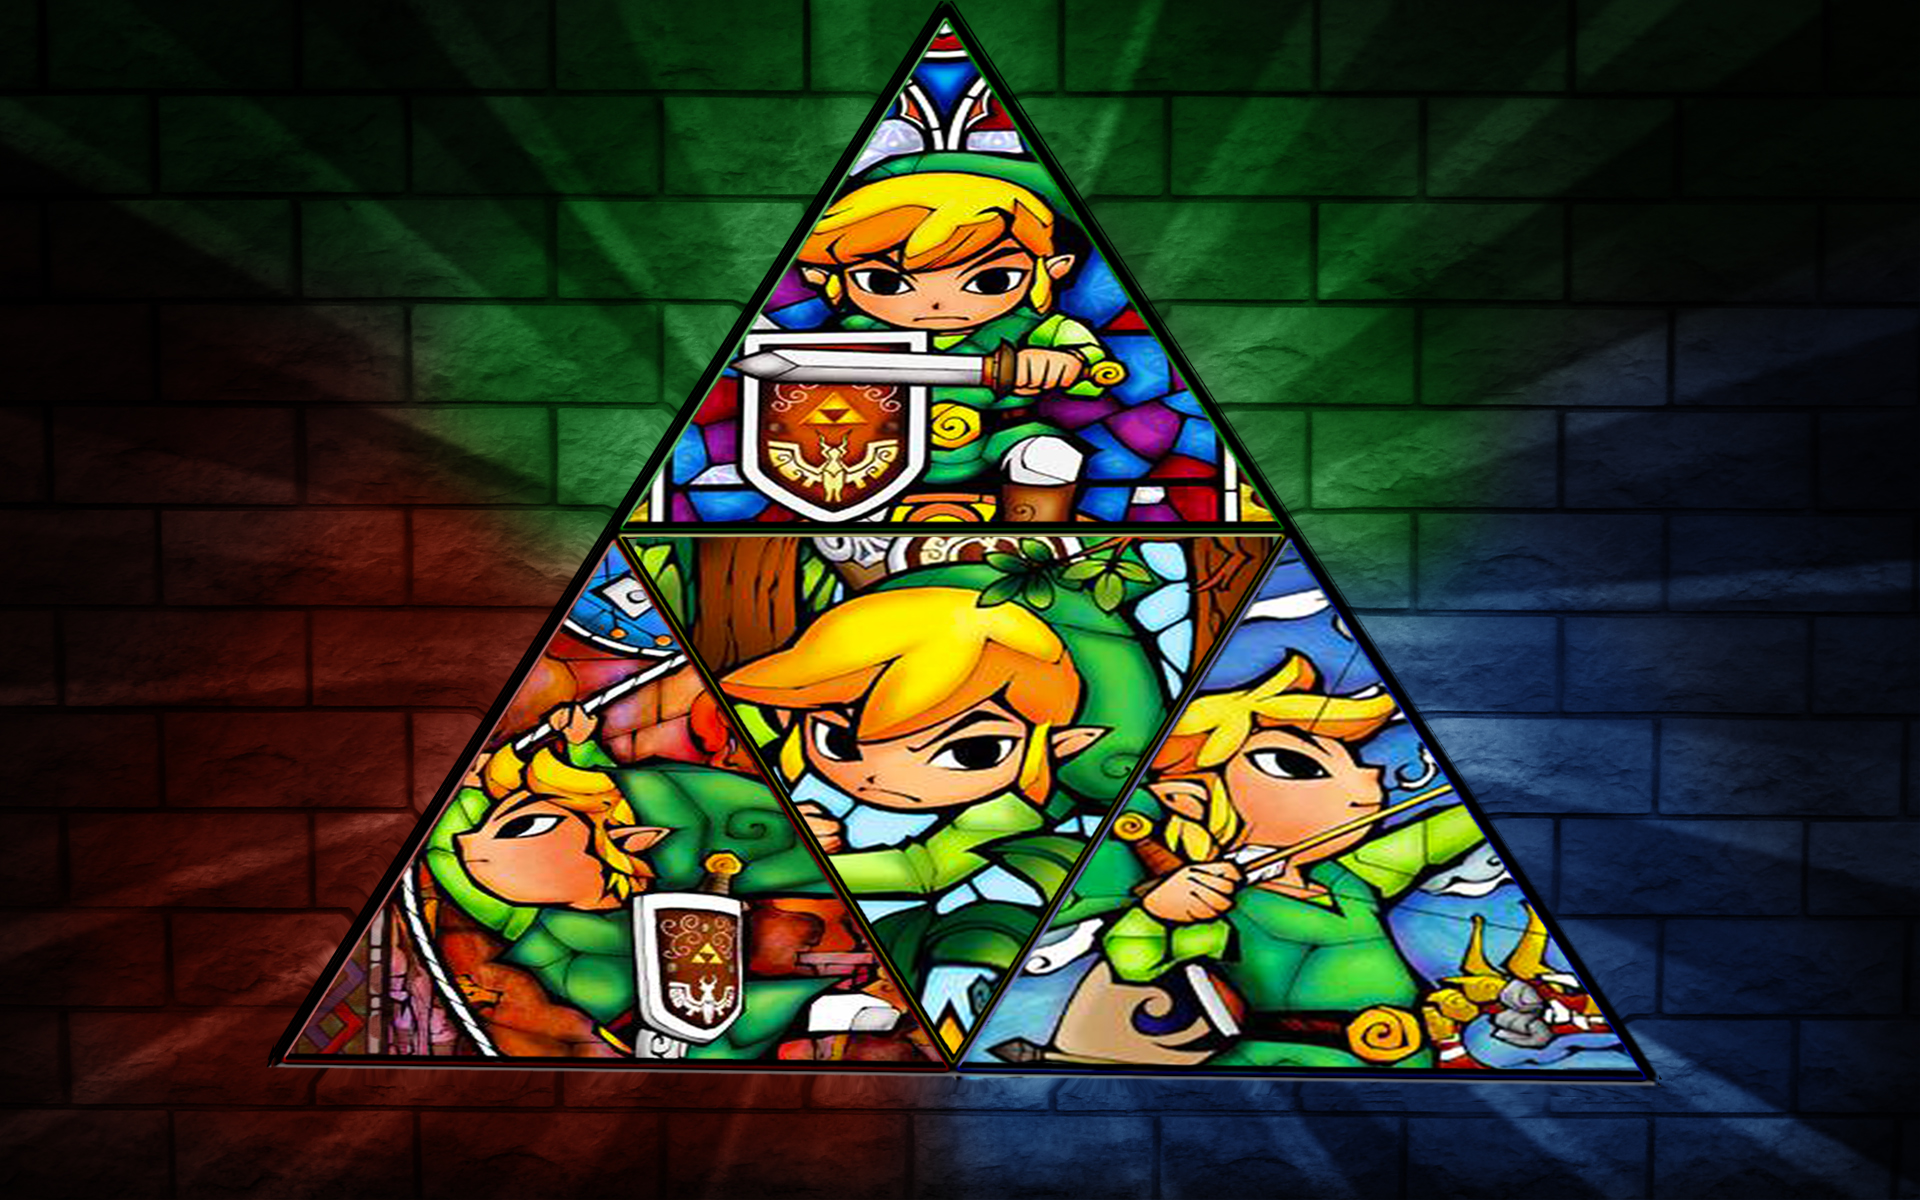 Wallpaper de la Leyenda de Zelda